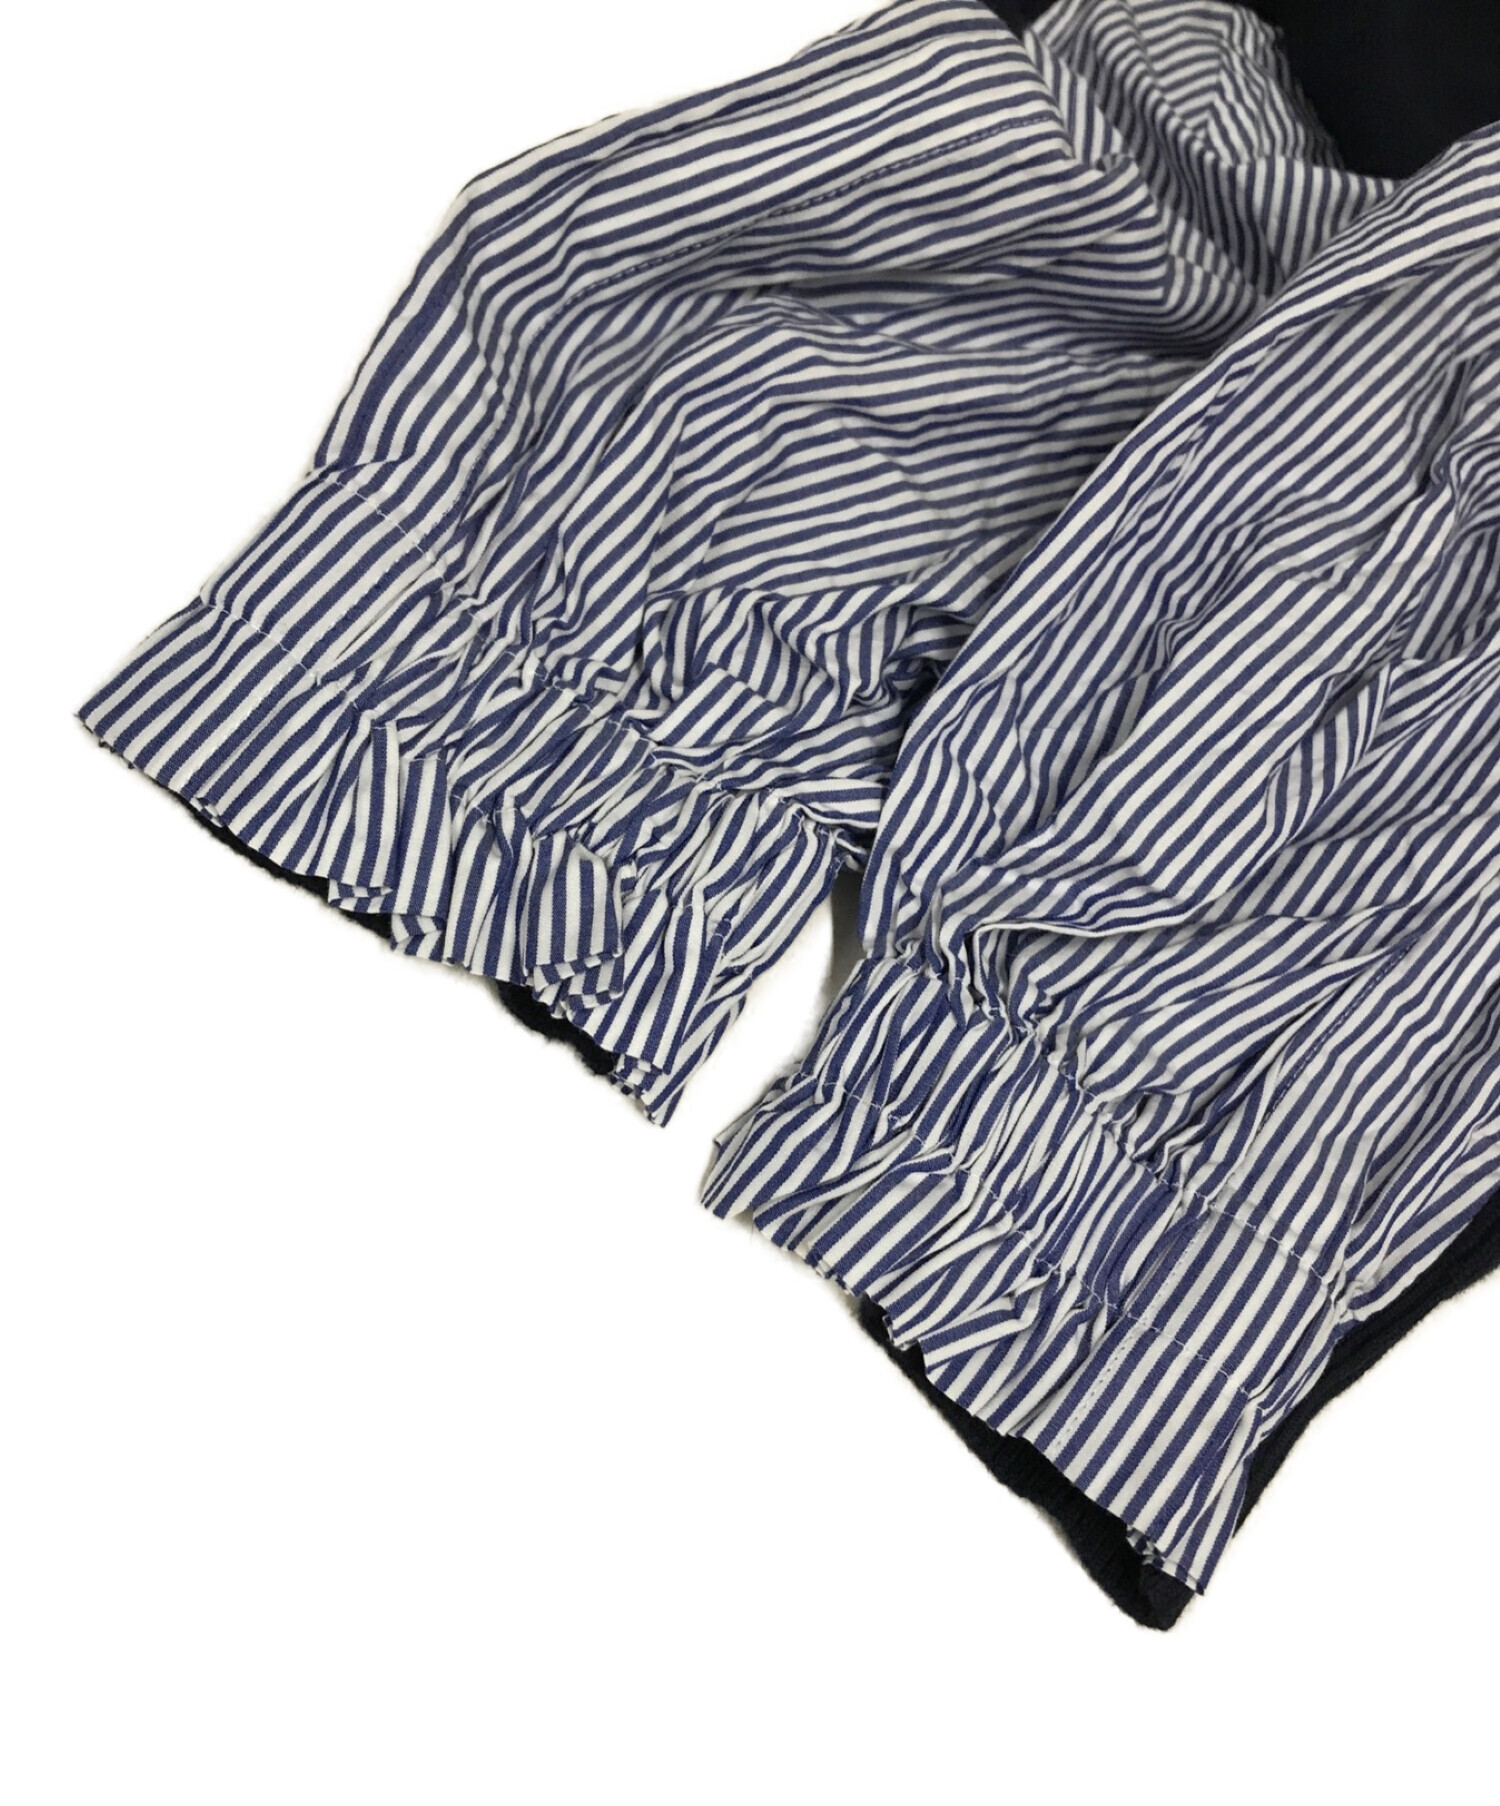 sacai (サカイ) バックプリーツ ニットドッキングシャツ ネイビー サイズ:1